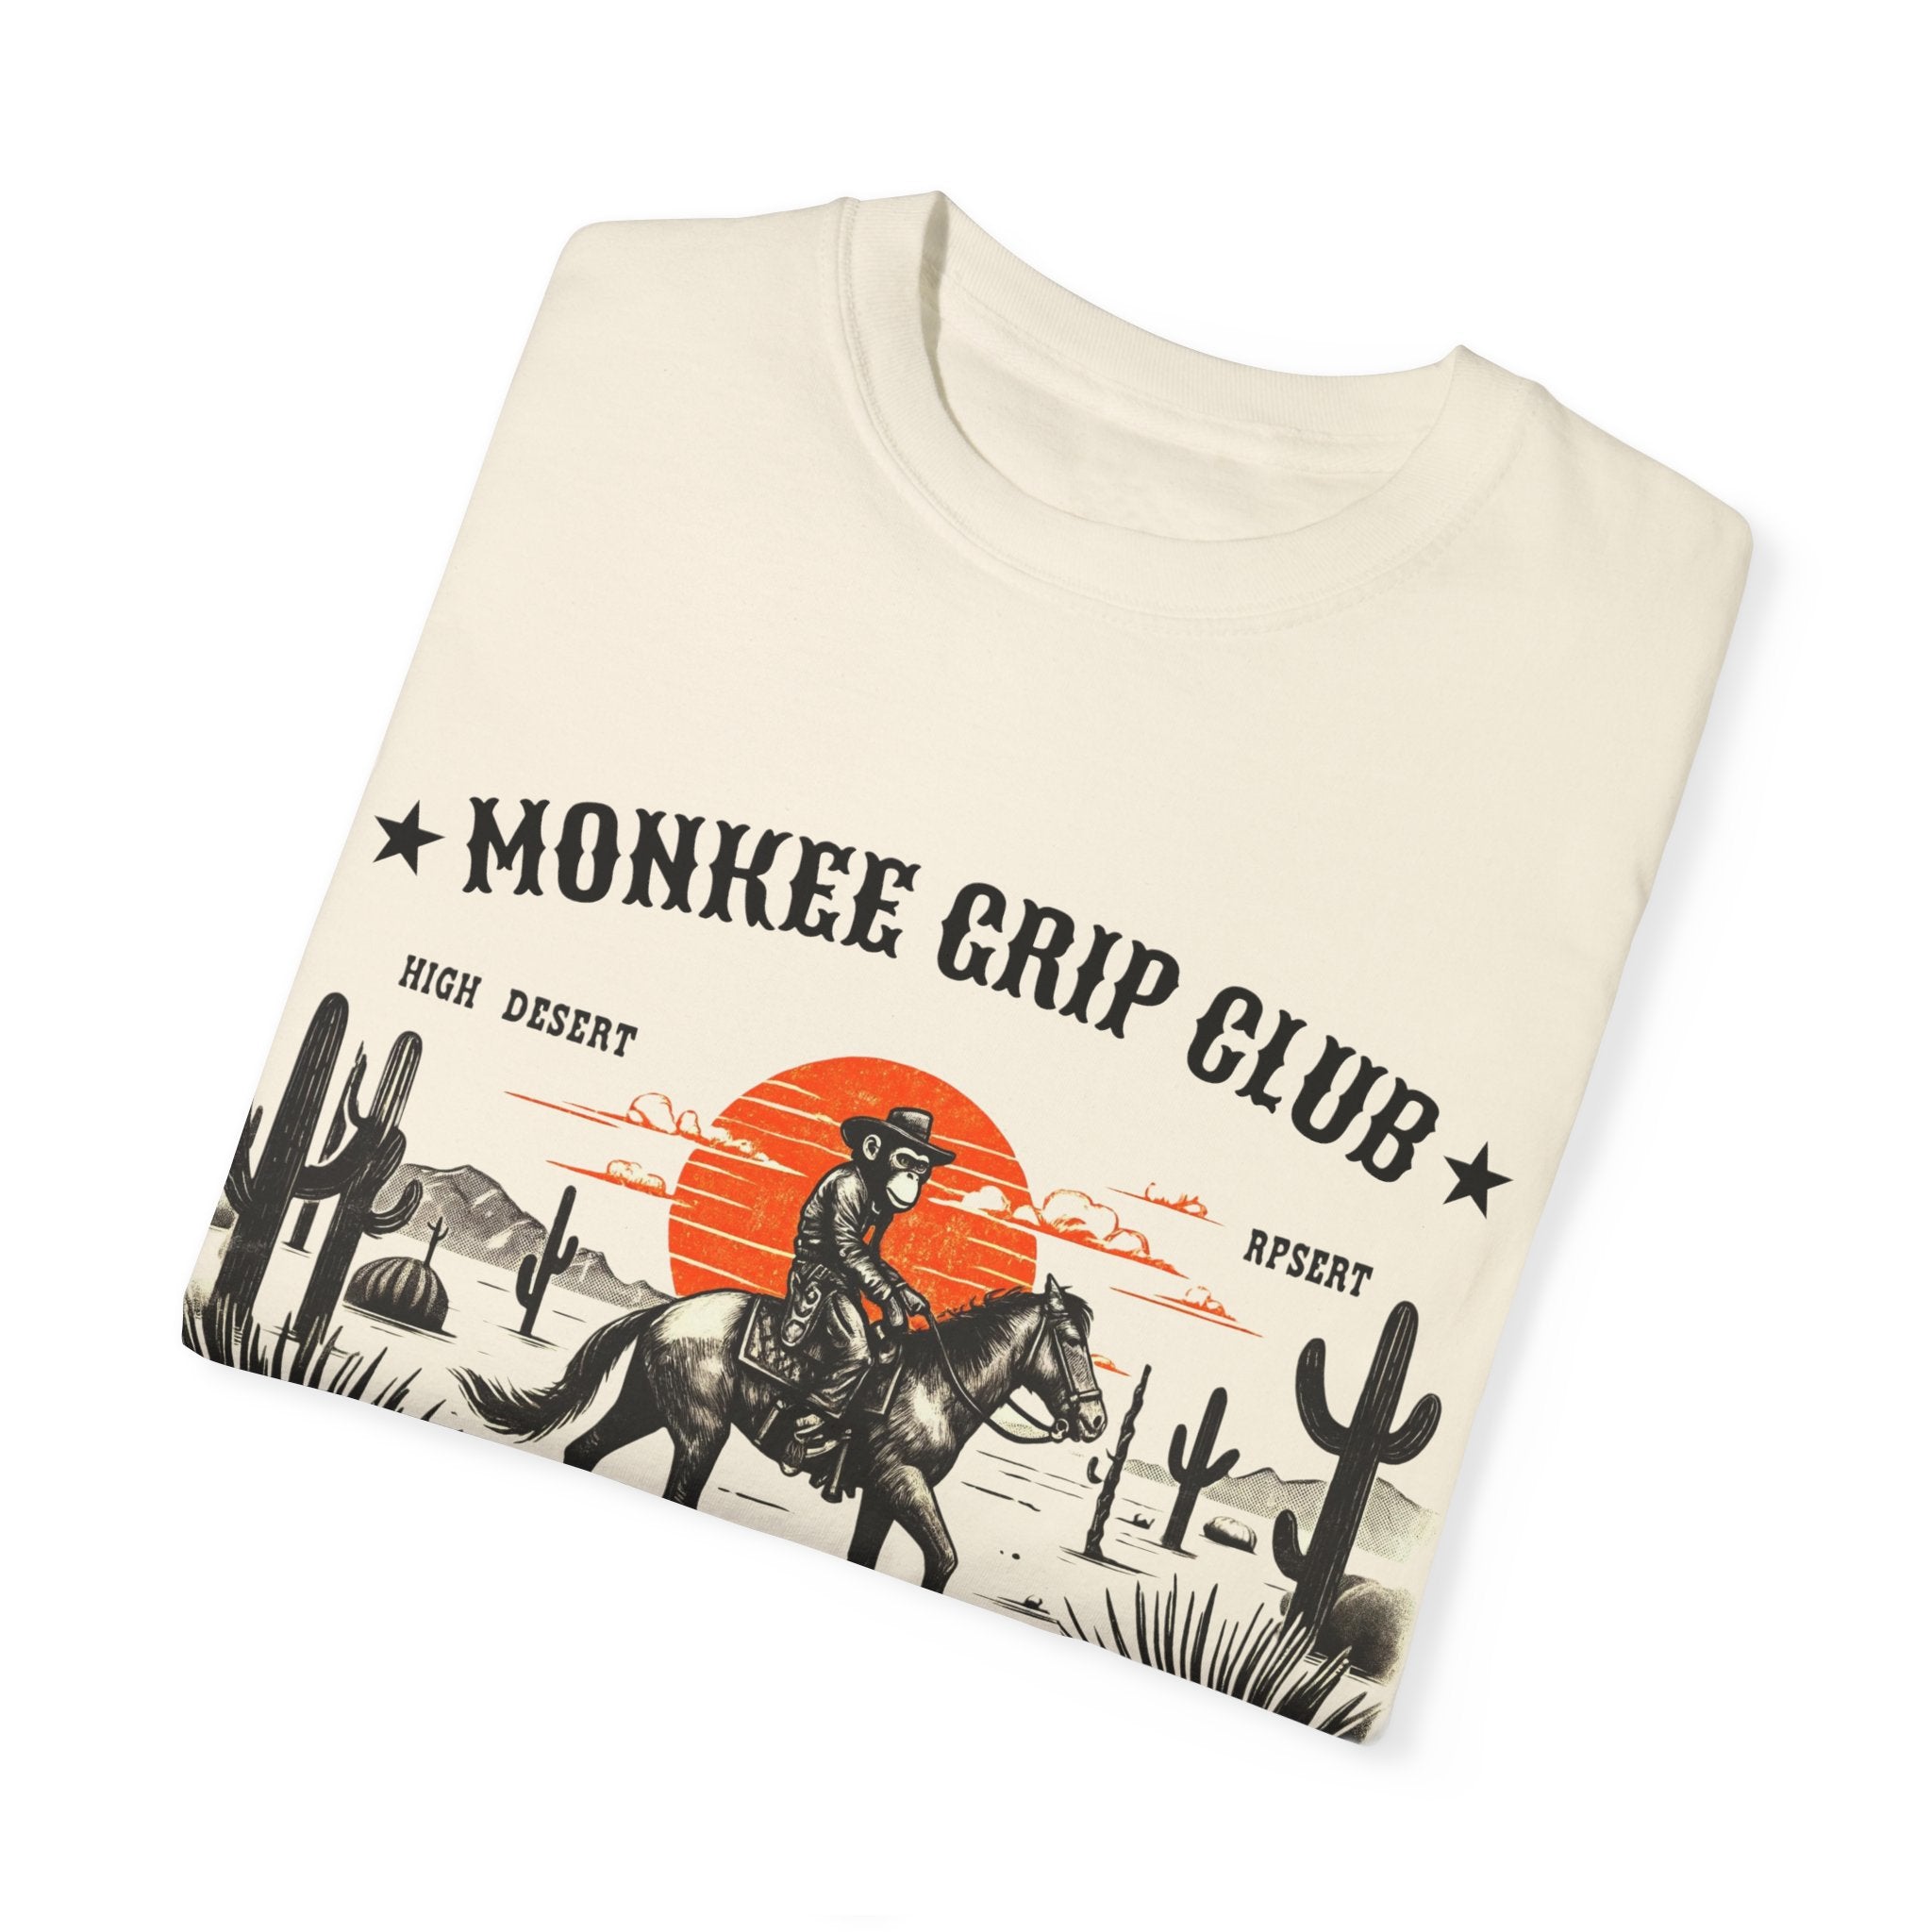 Monkee Grip Club High Desert Edition